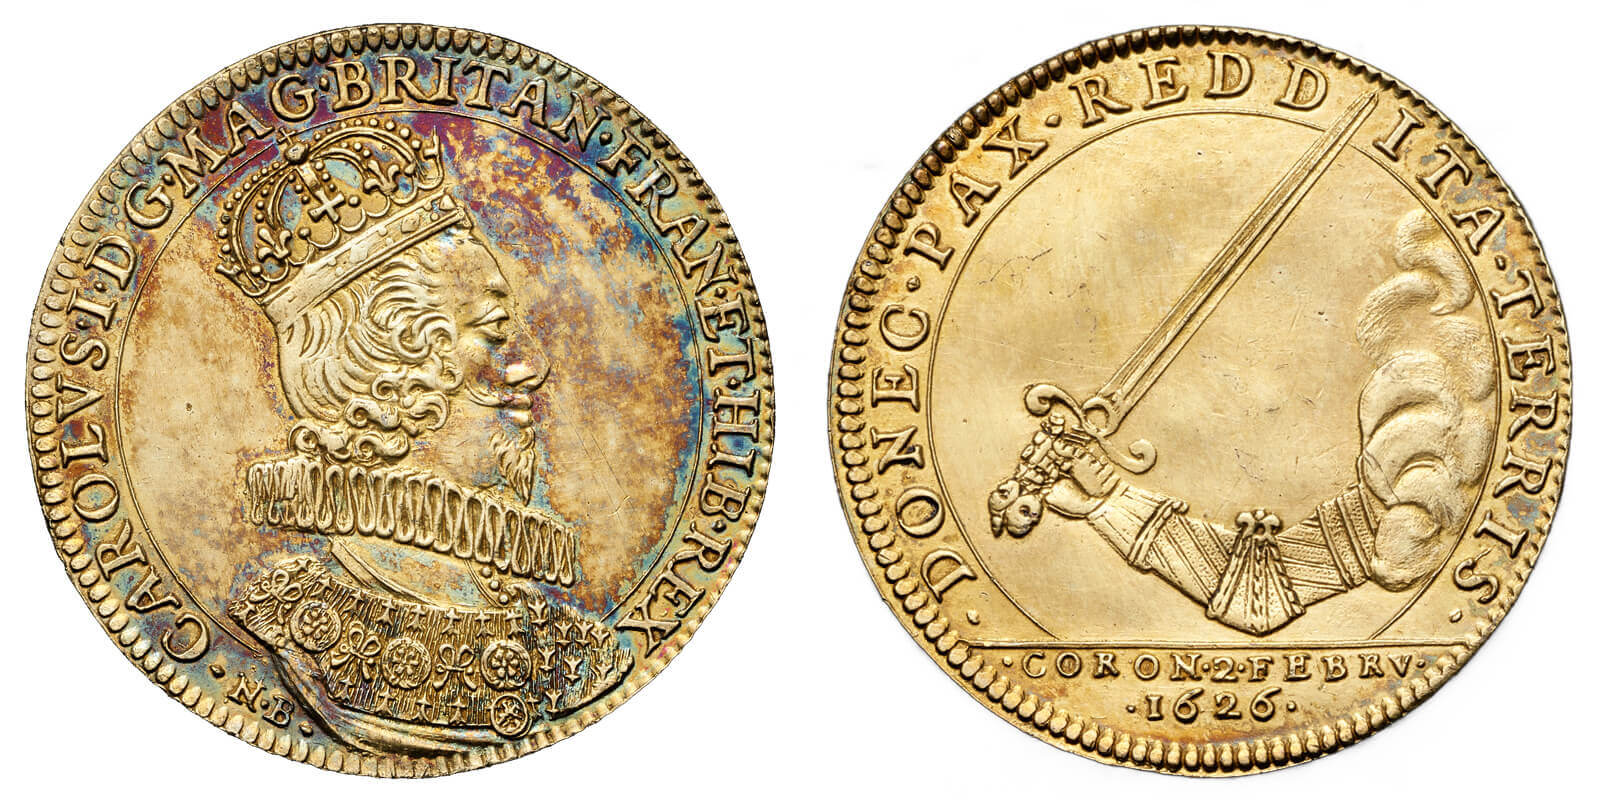 Charles I coronation medal.jpg